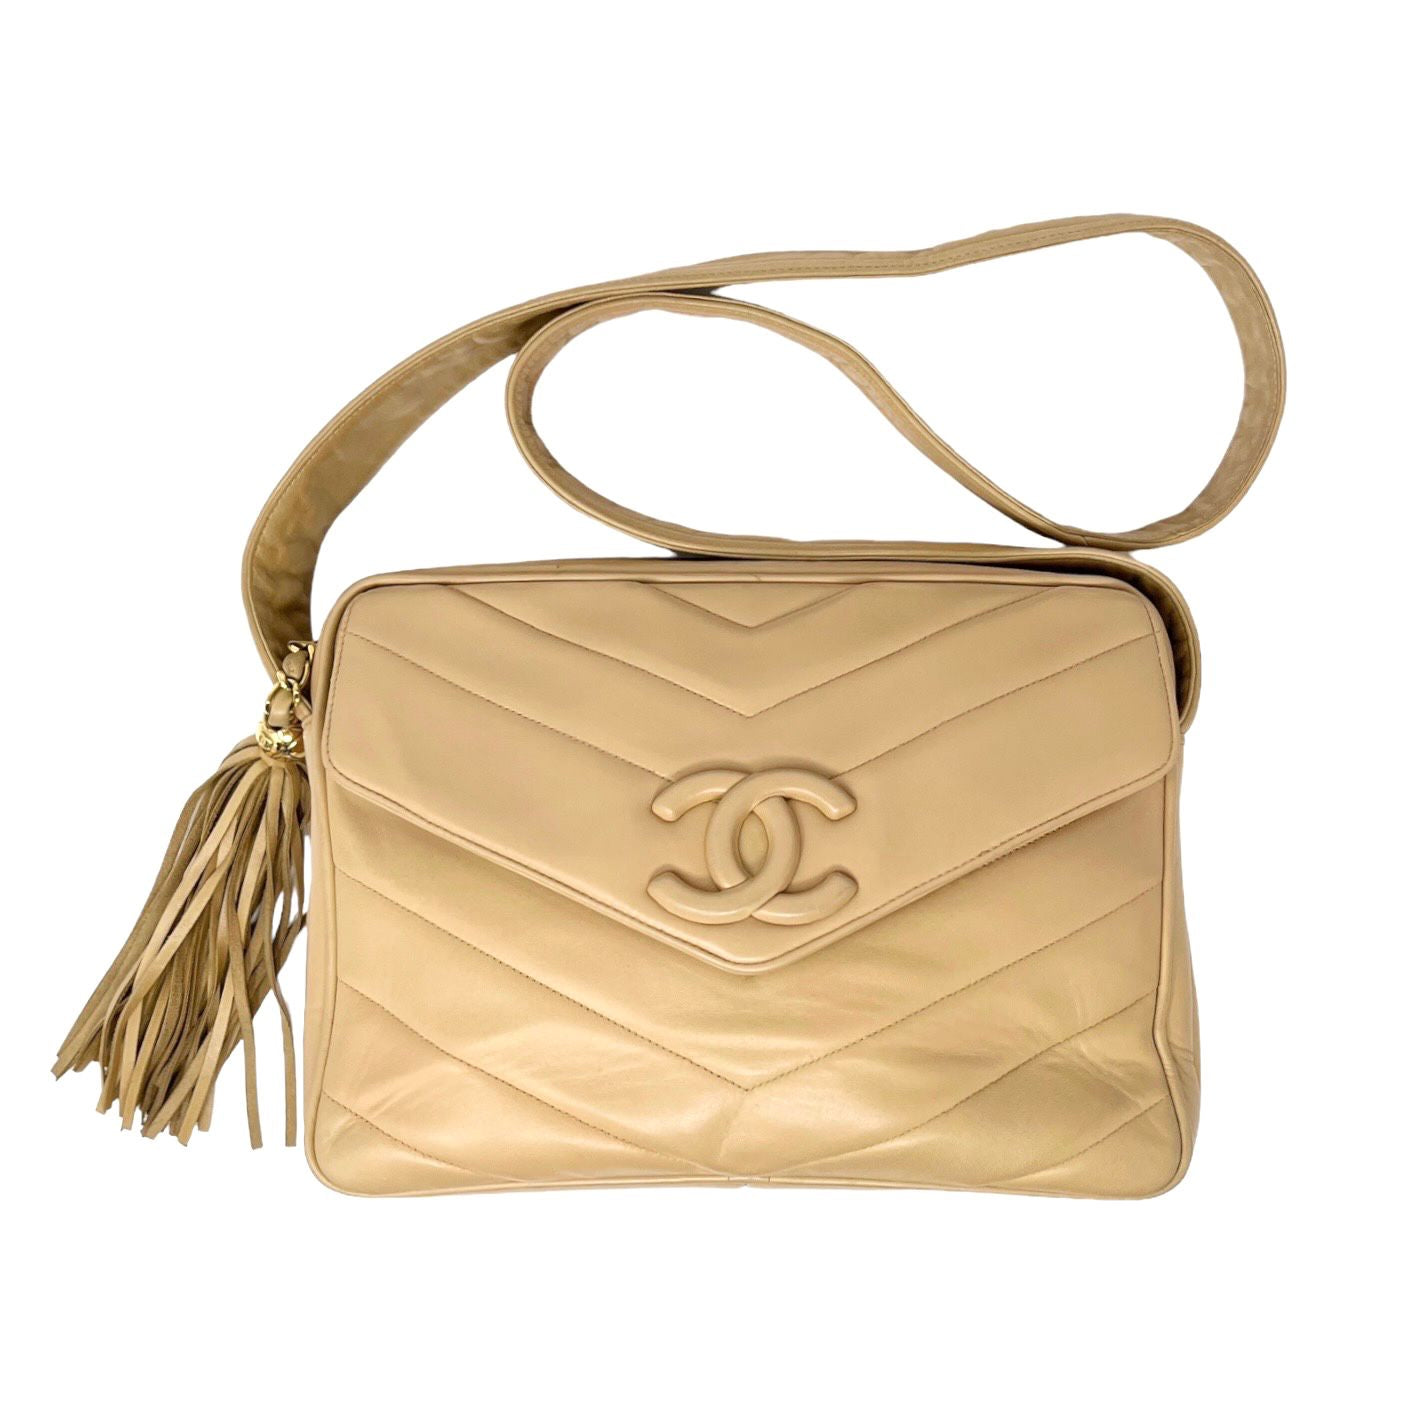 Chanel beige chevron leather cross body camera handbag 1980s